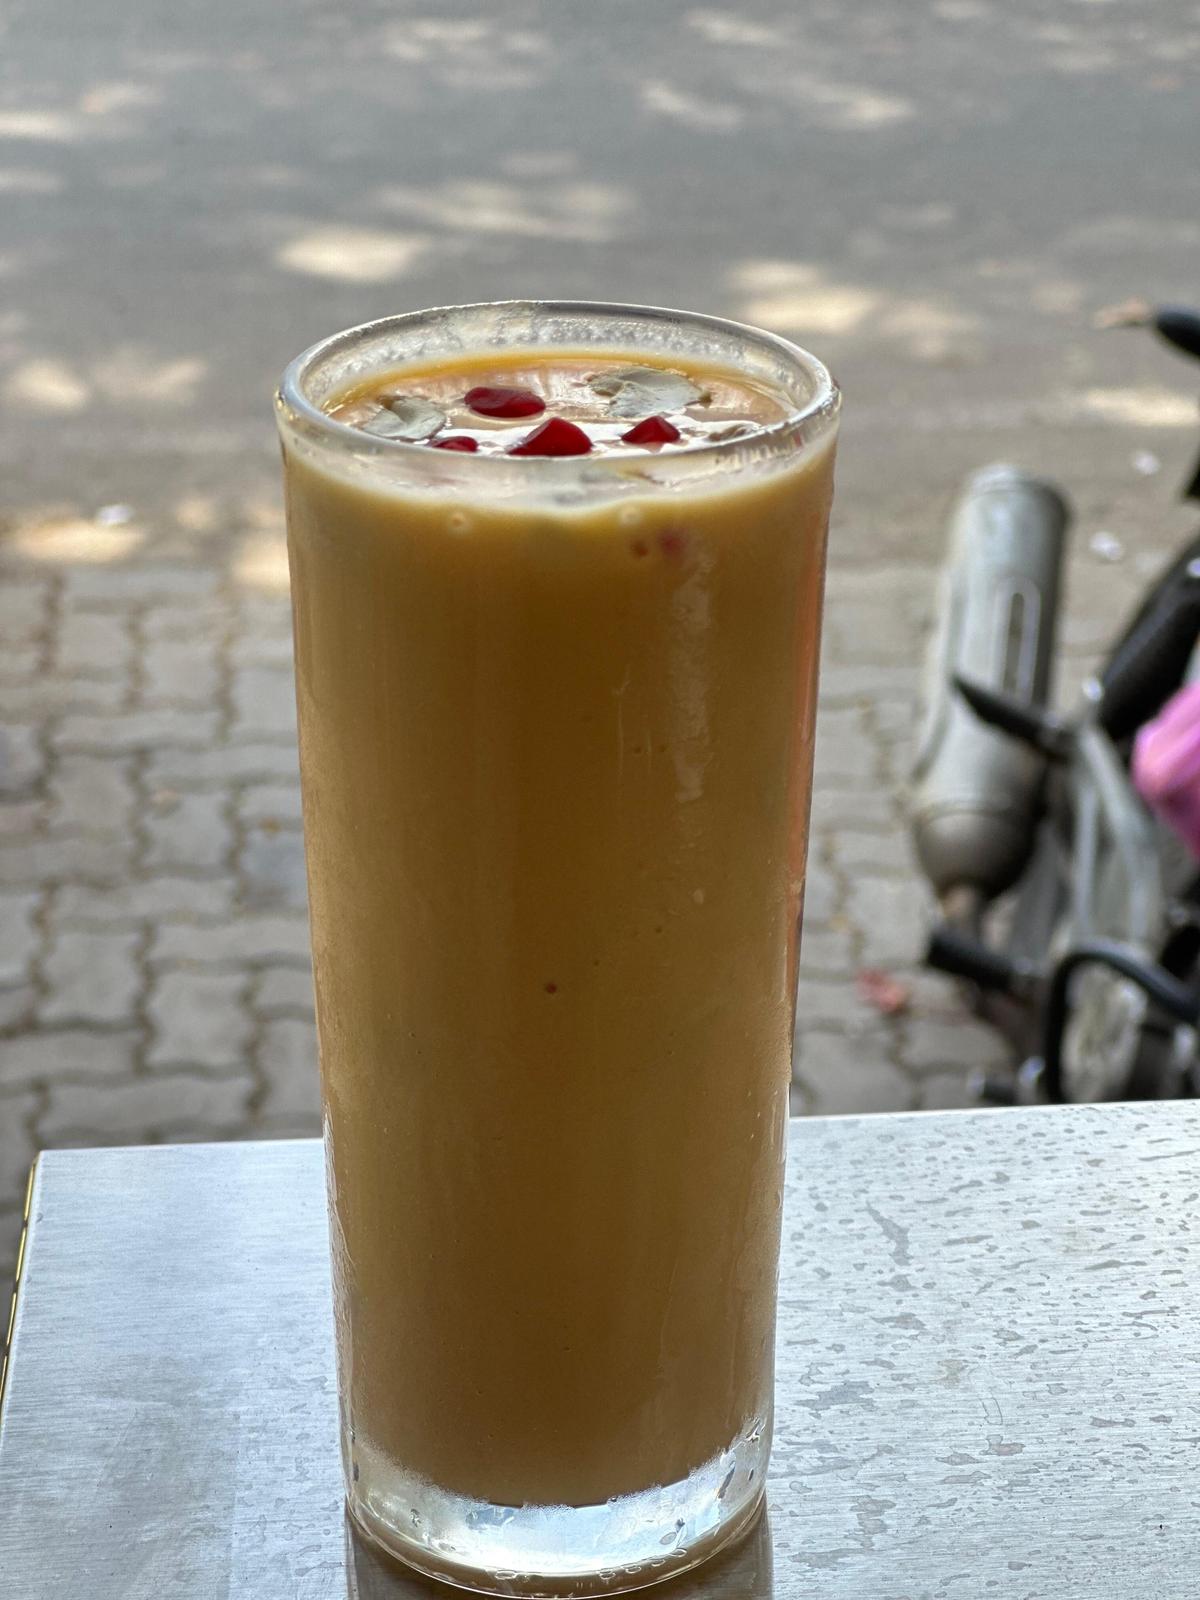 Kannur cocktail at Cafe 29